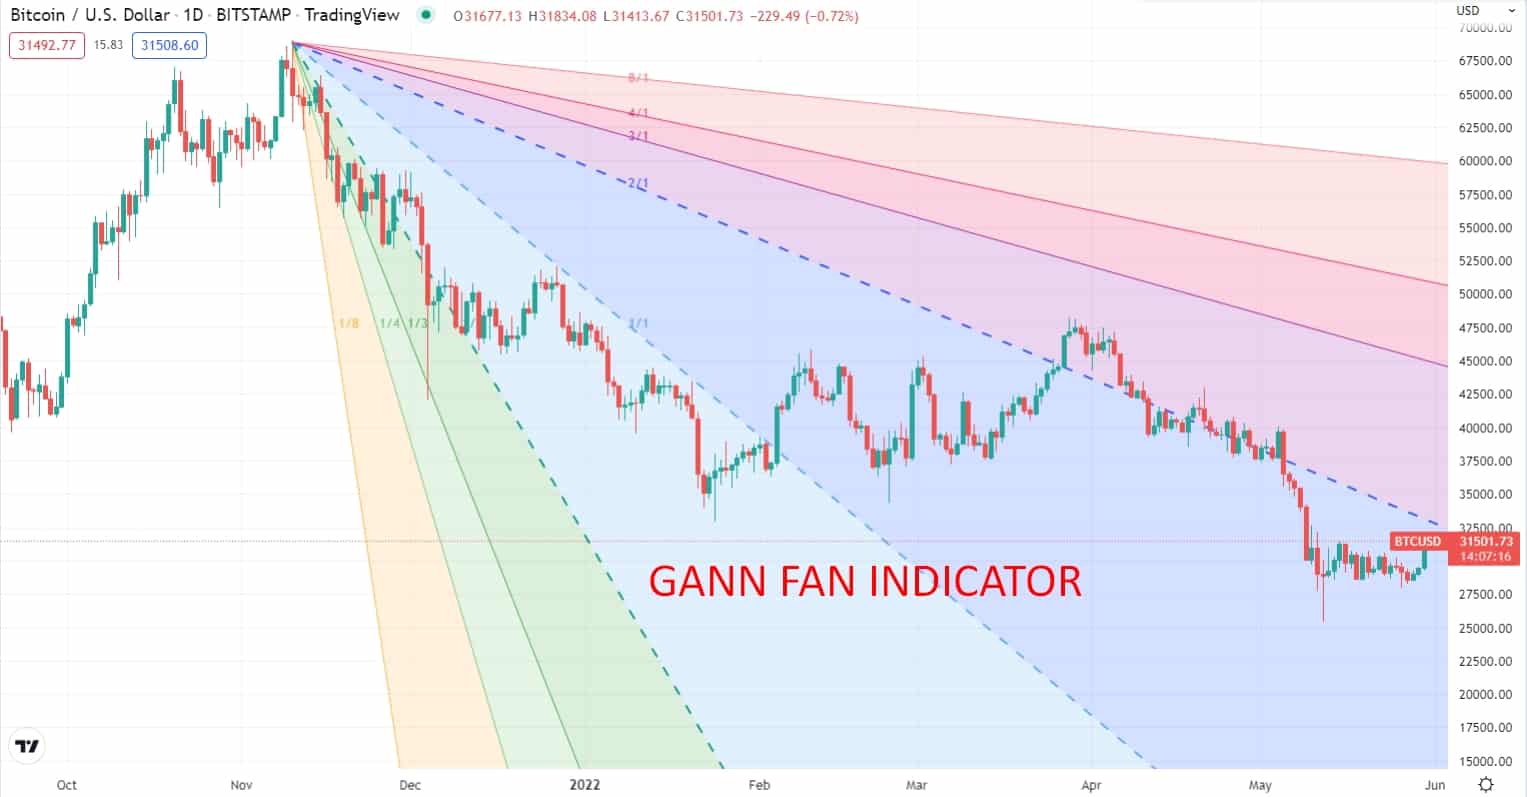 Gann fan indicator on the chart